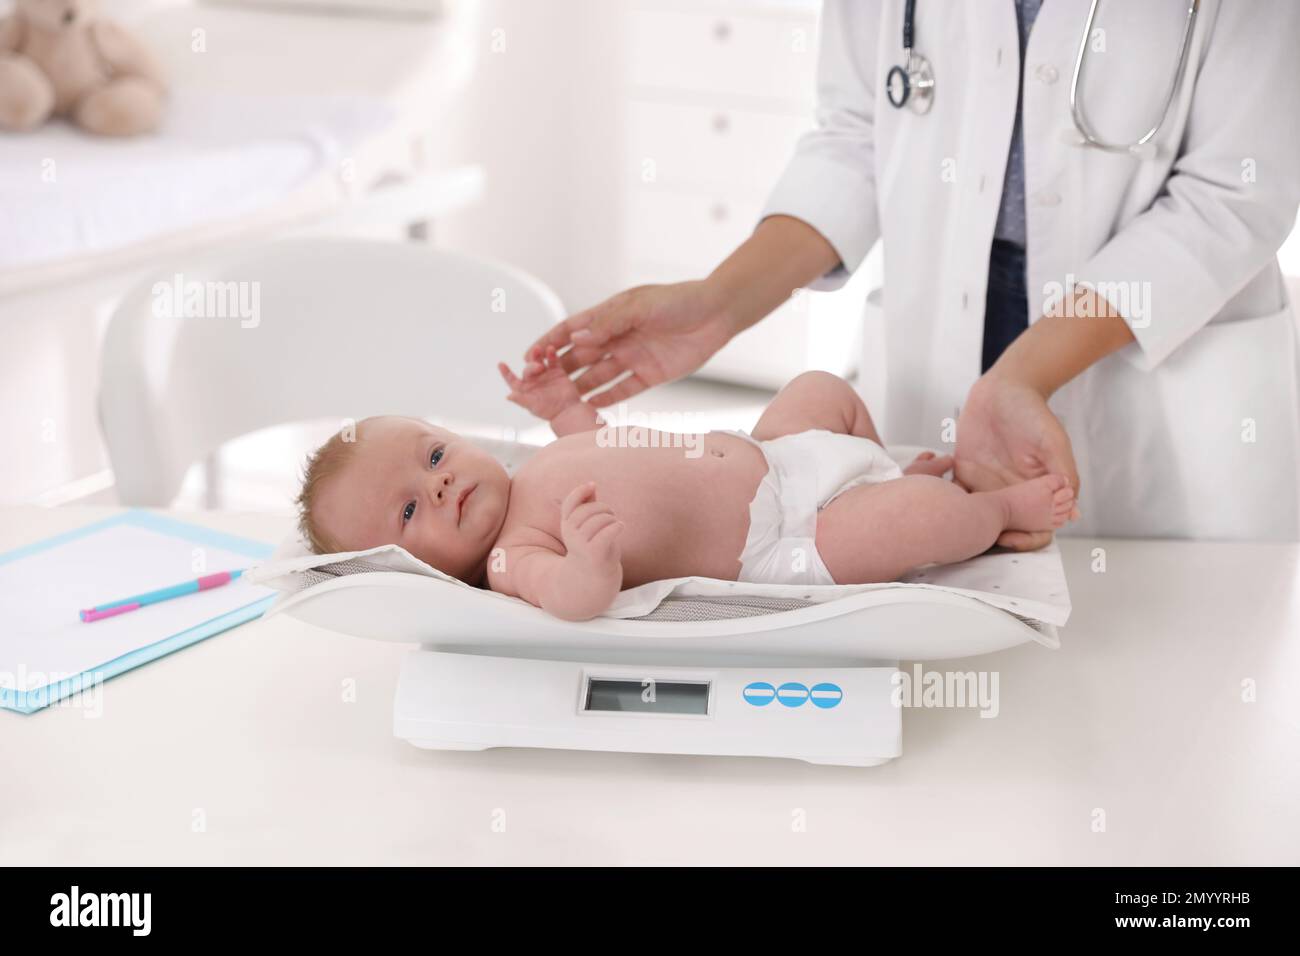 https://c8.alamy.com/comp/2MYYRHB/doctor-weighting-cute-baby-in-clinic-closeup-health-care-2MYYRHB.jpg